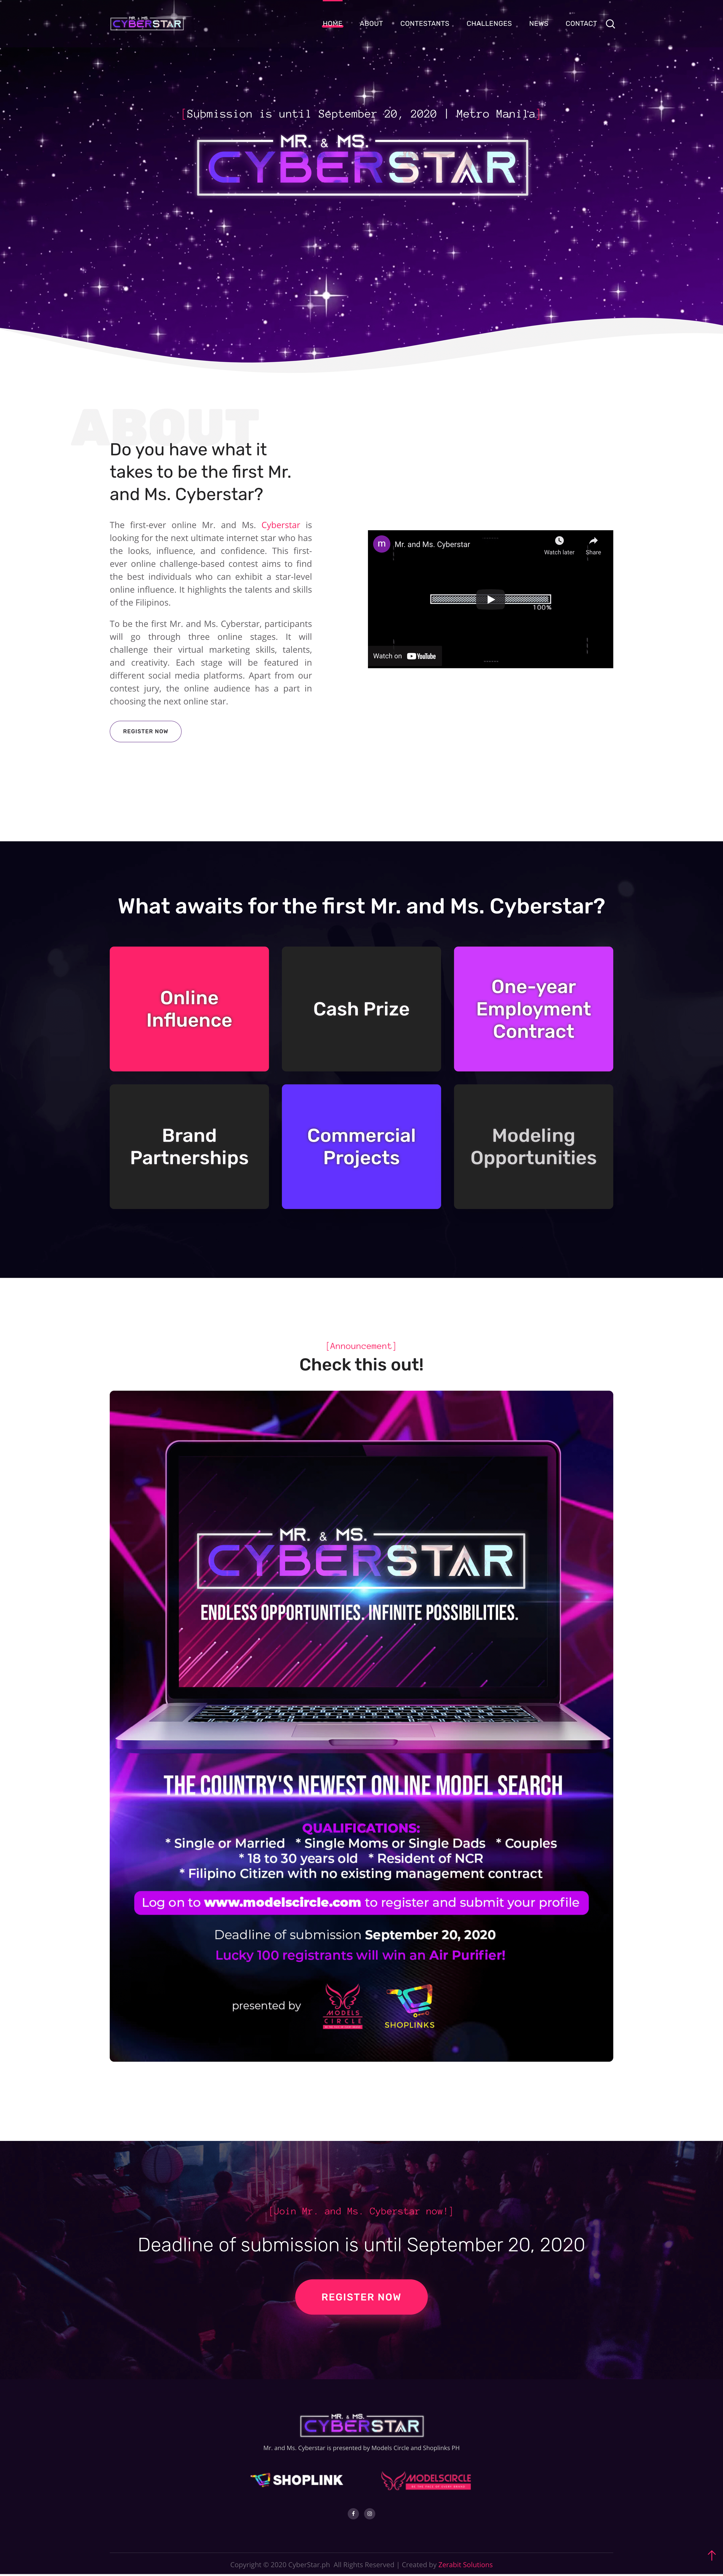 Cyberstar - Full Home Page-min